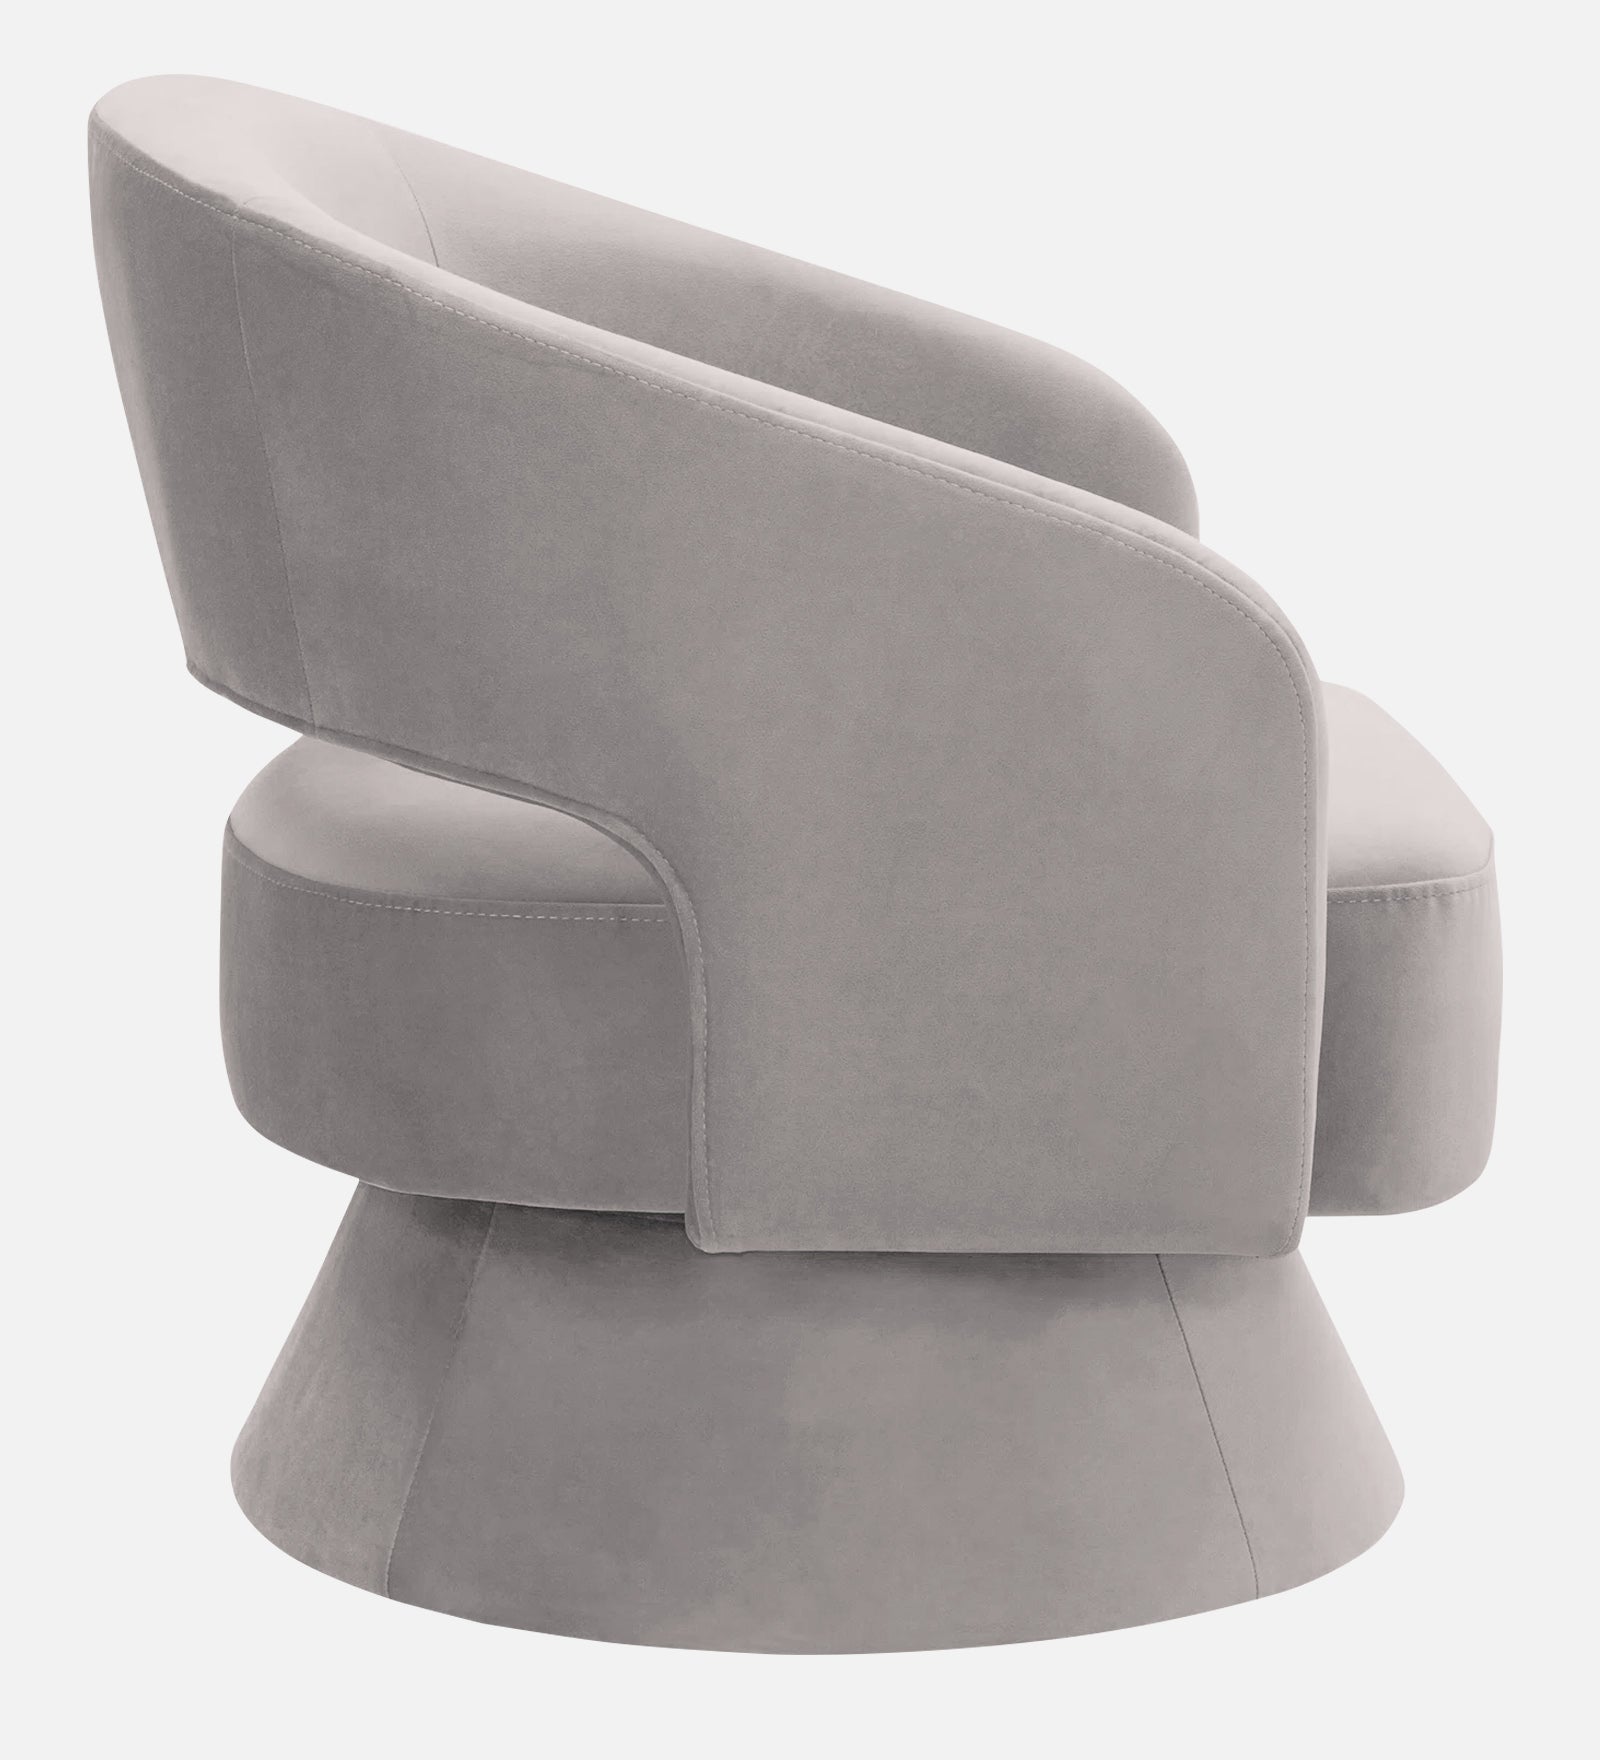 Pendra Velvet Swivel Chair in Pearl Grey Colour